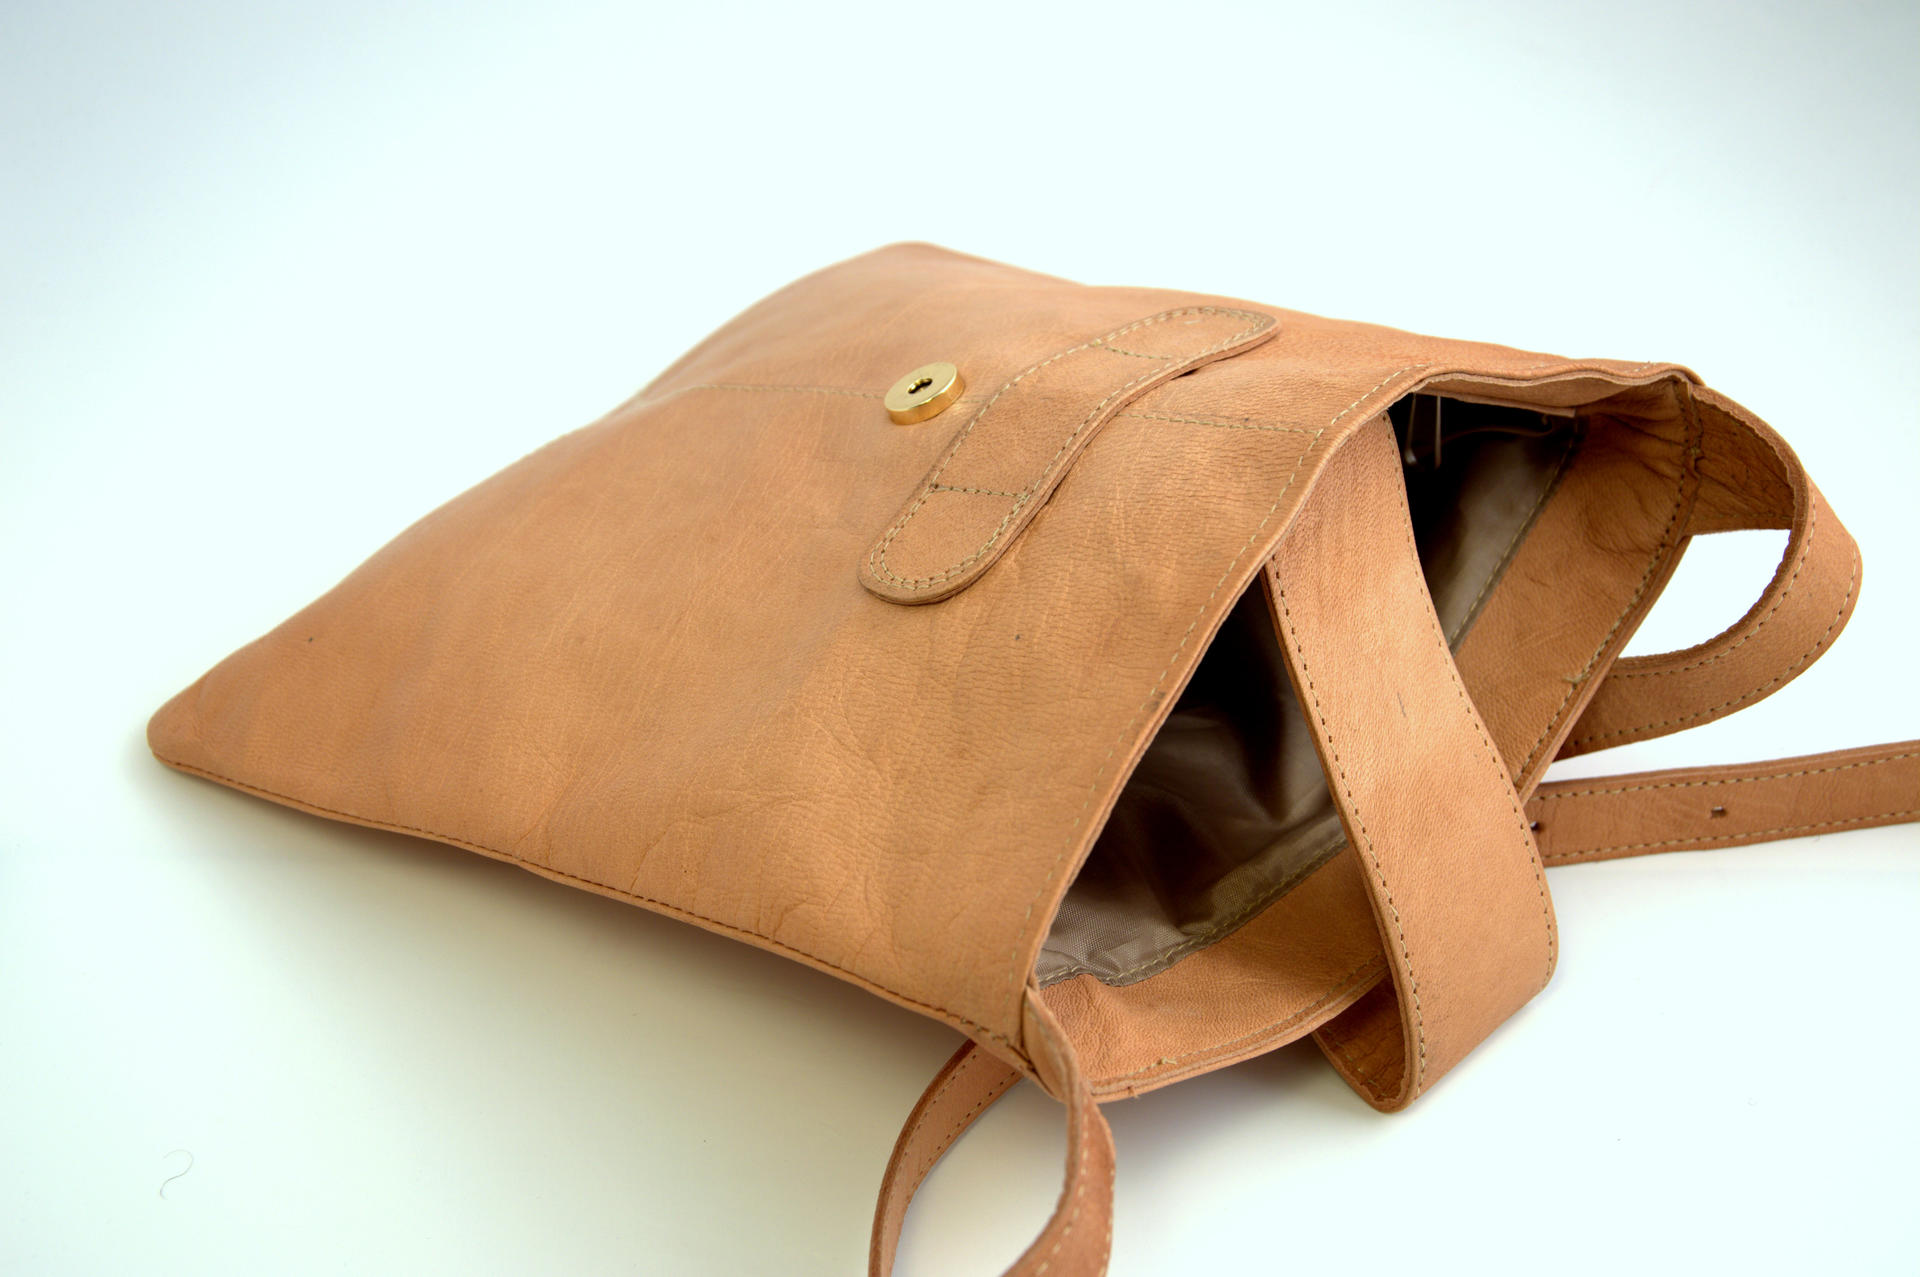 Gundara - genuine leather - hand bag - Afghanistan - fair trade